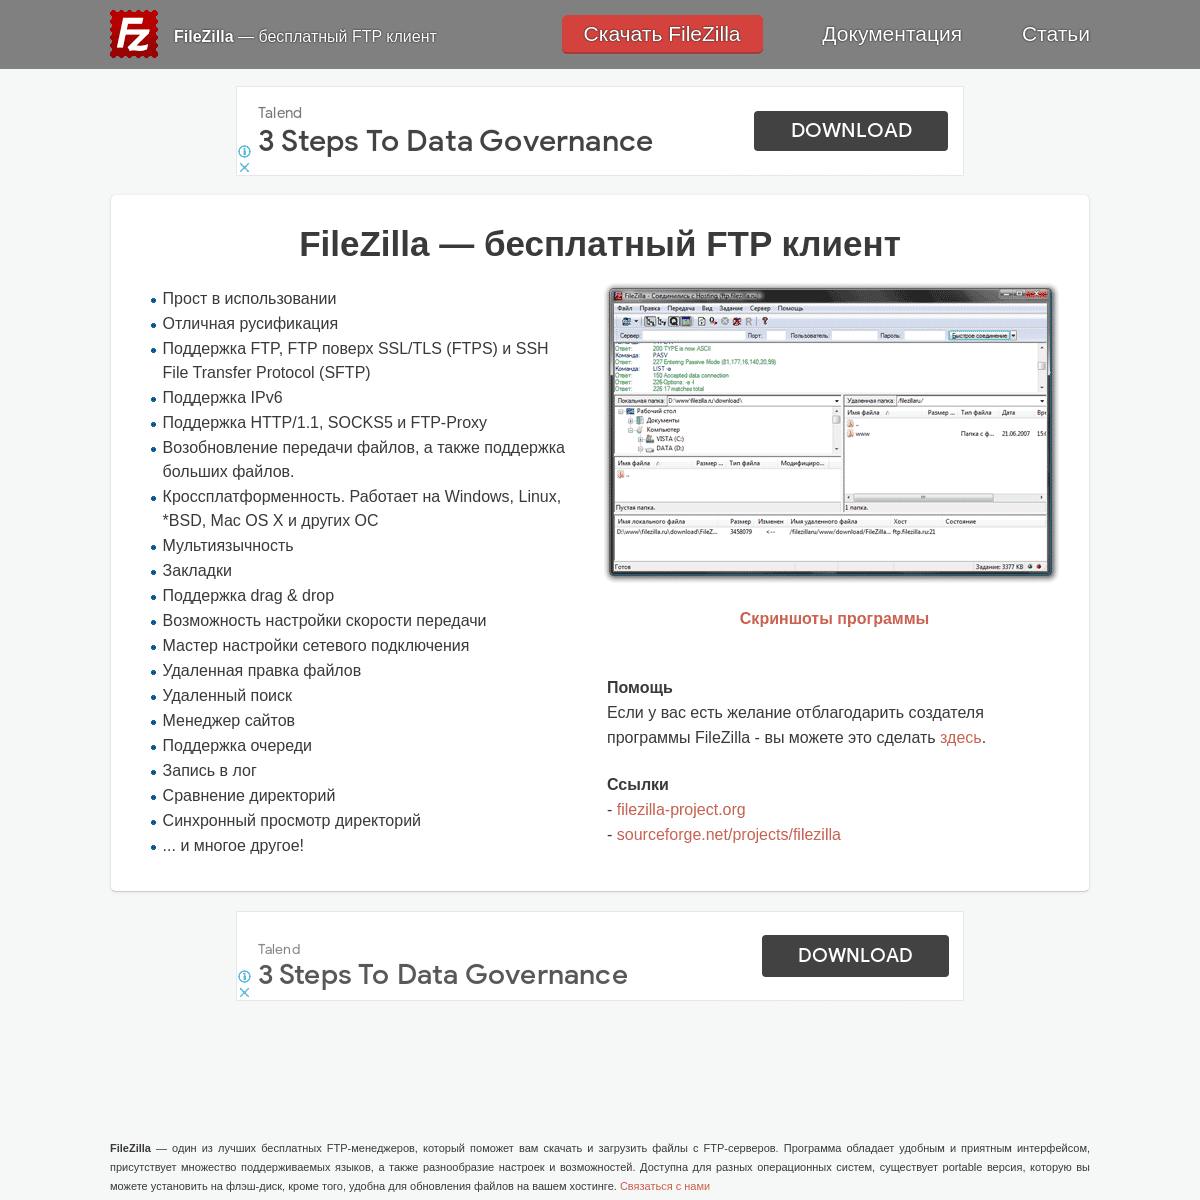 A complete backup of https://filezilla.ru